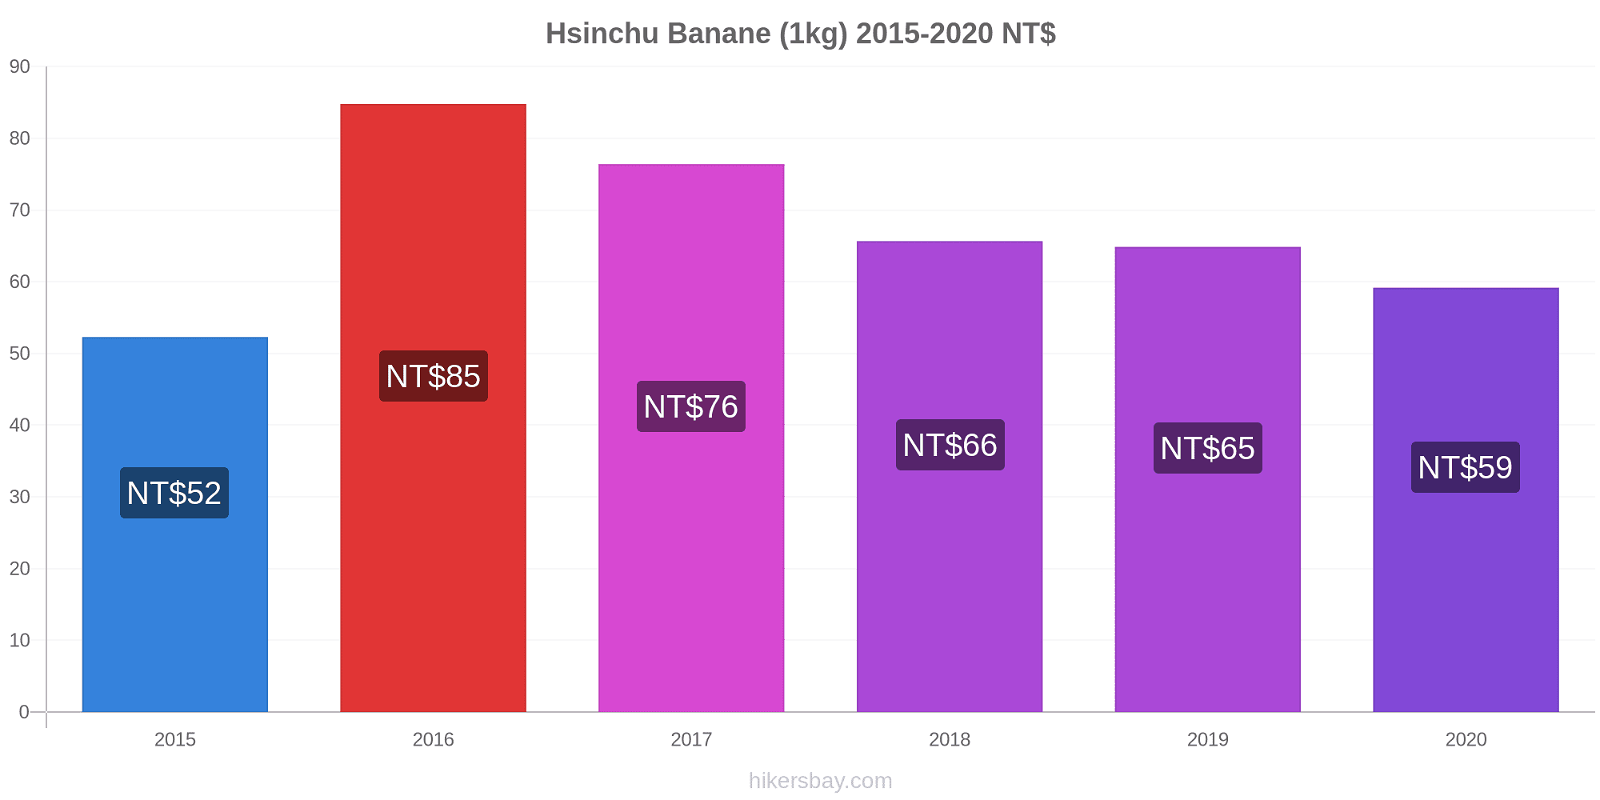 Hsinchu variazioni di prezzo Banana (1kg) hikersbay.com